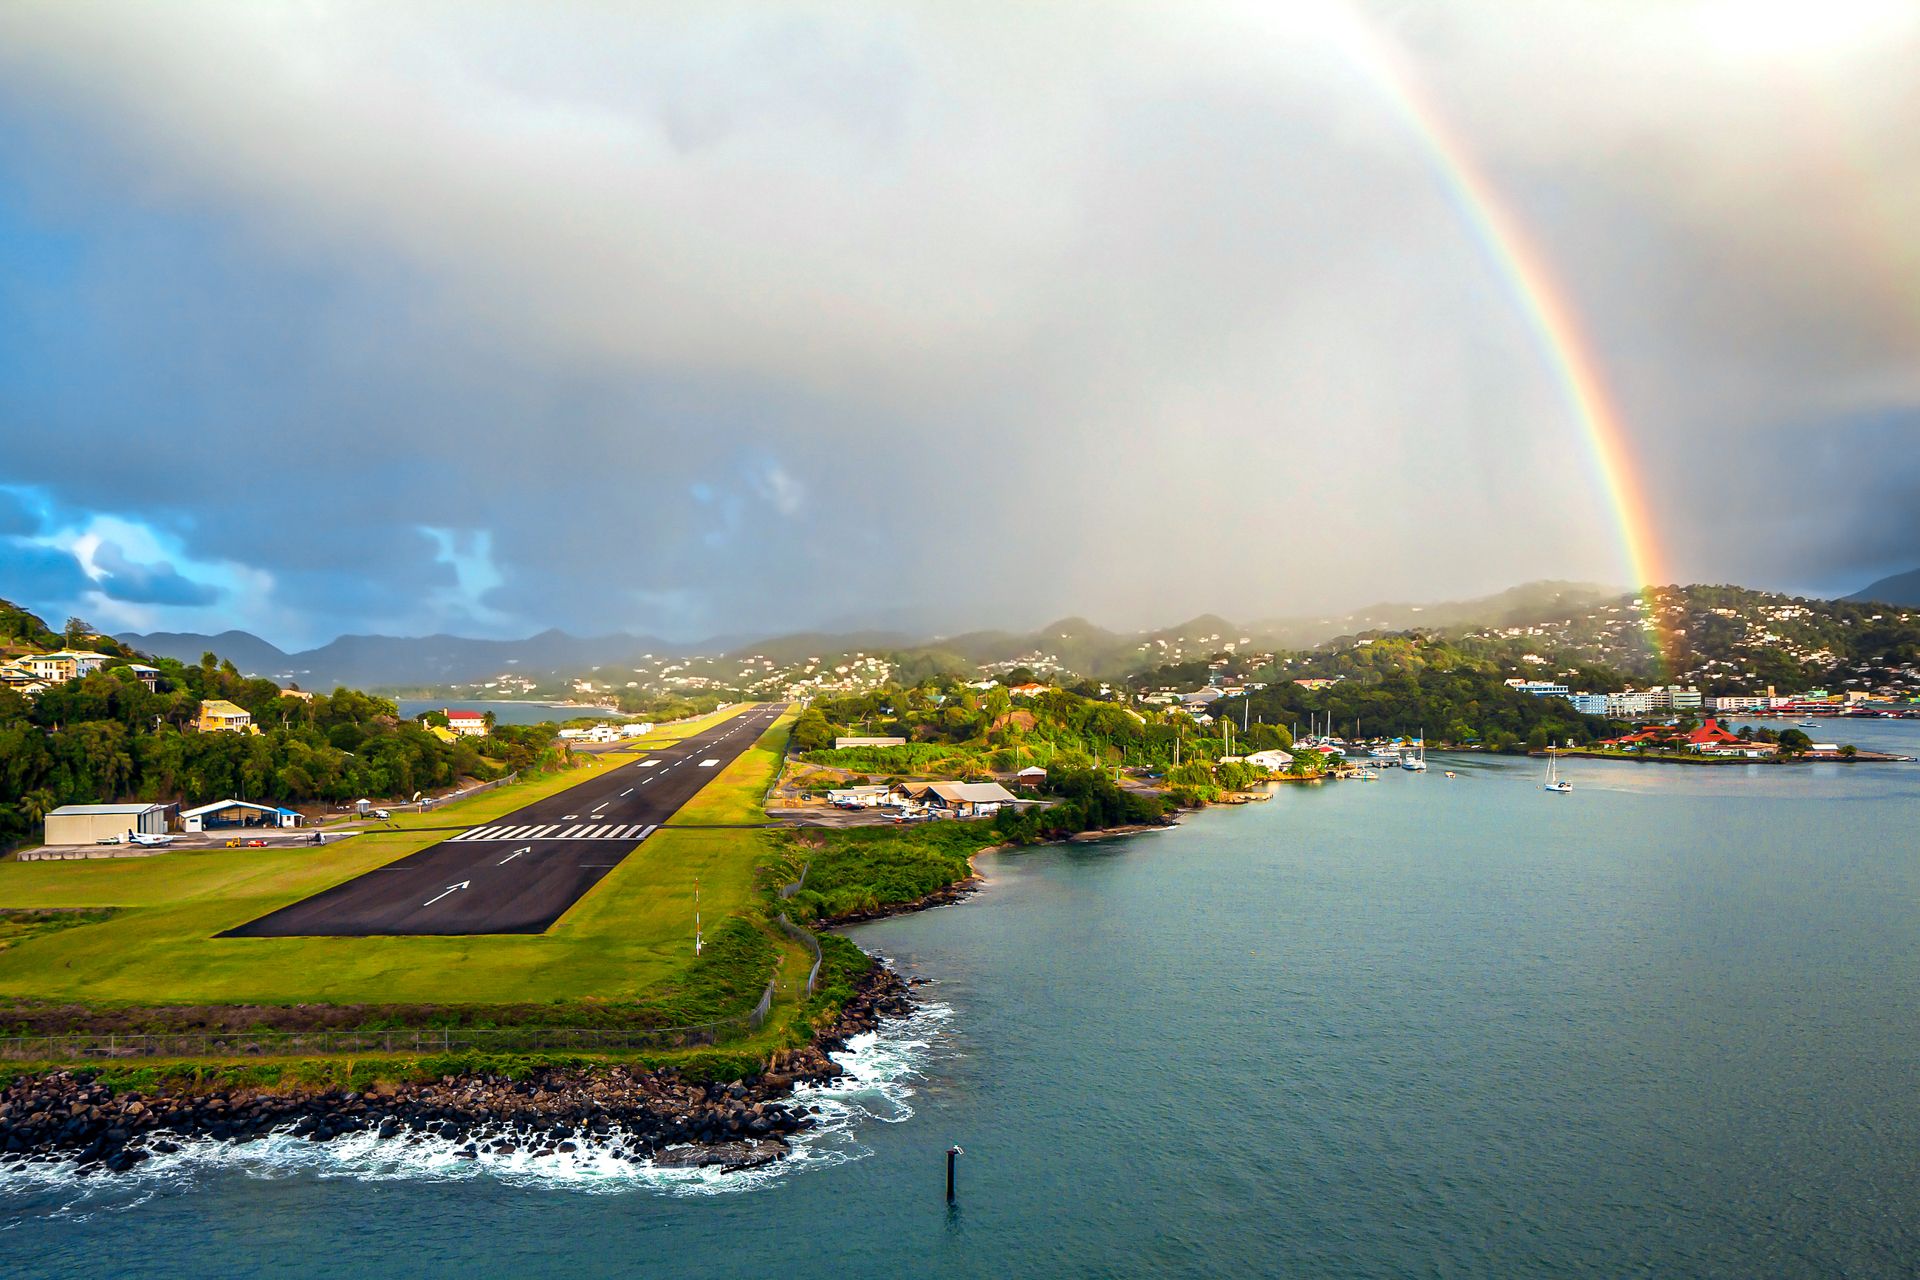 George FL Charles Airport Saint Lucia